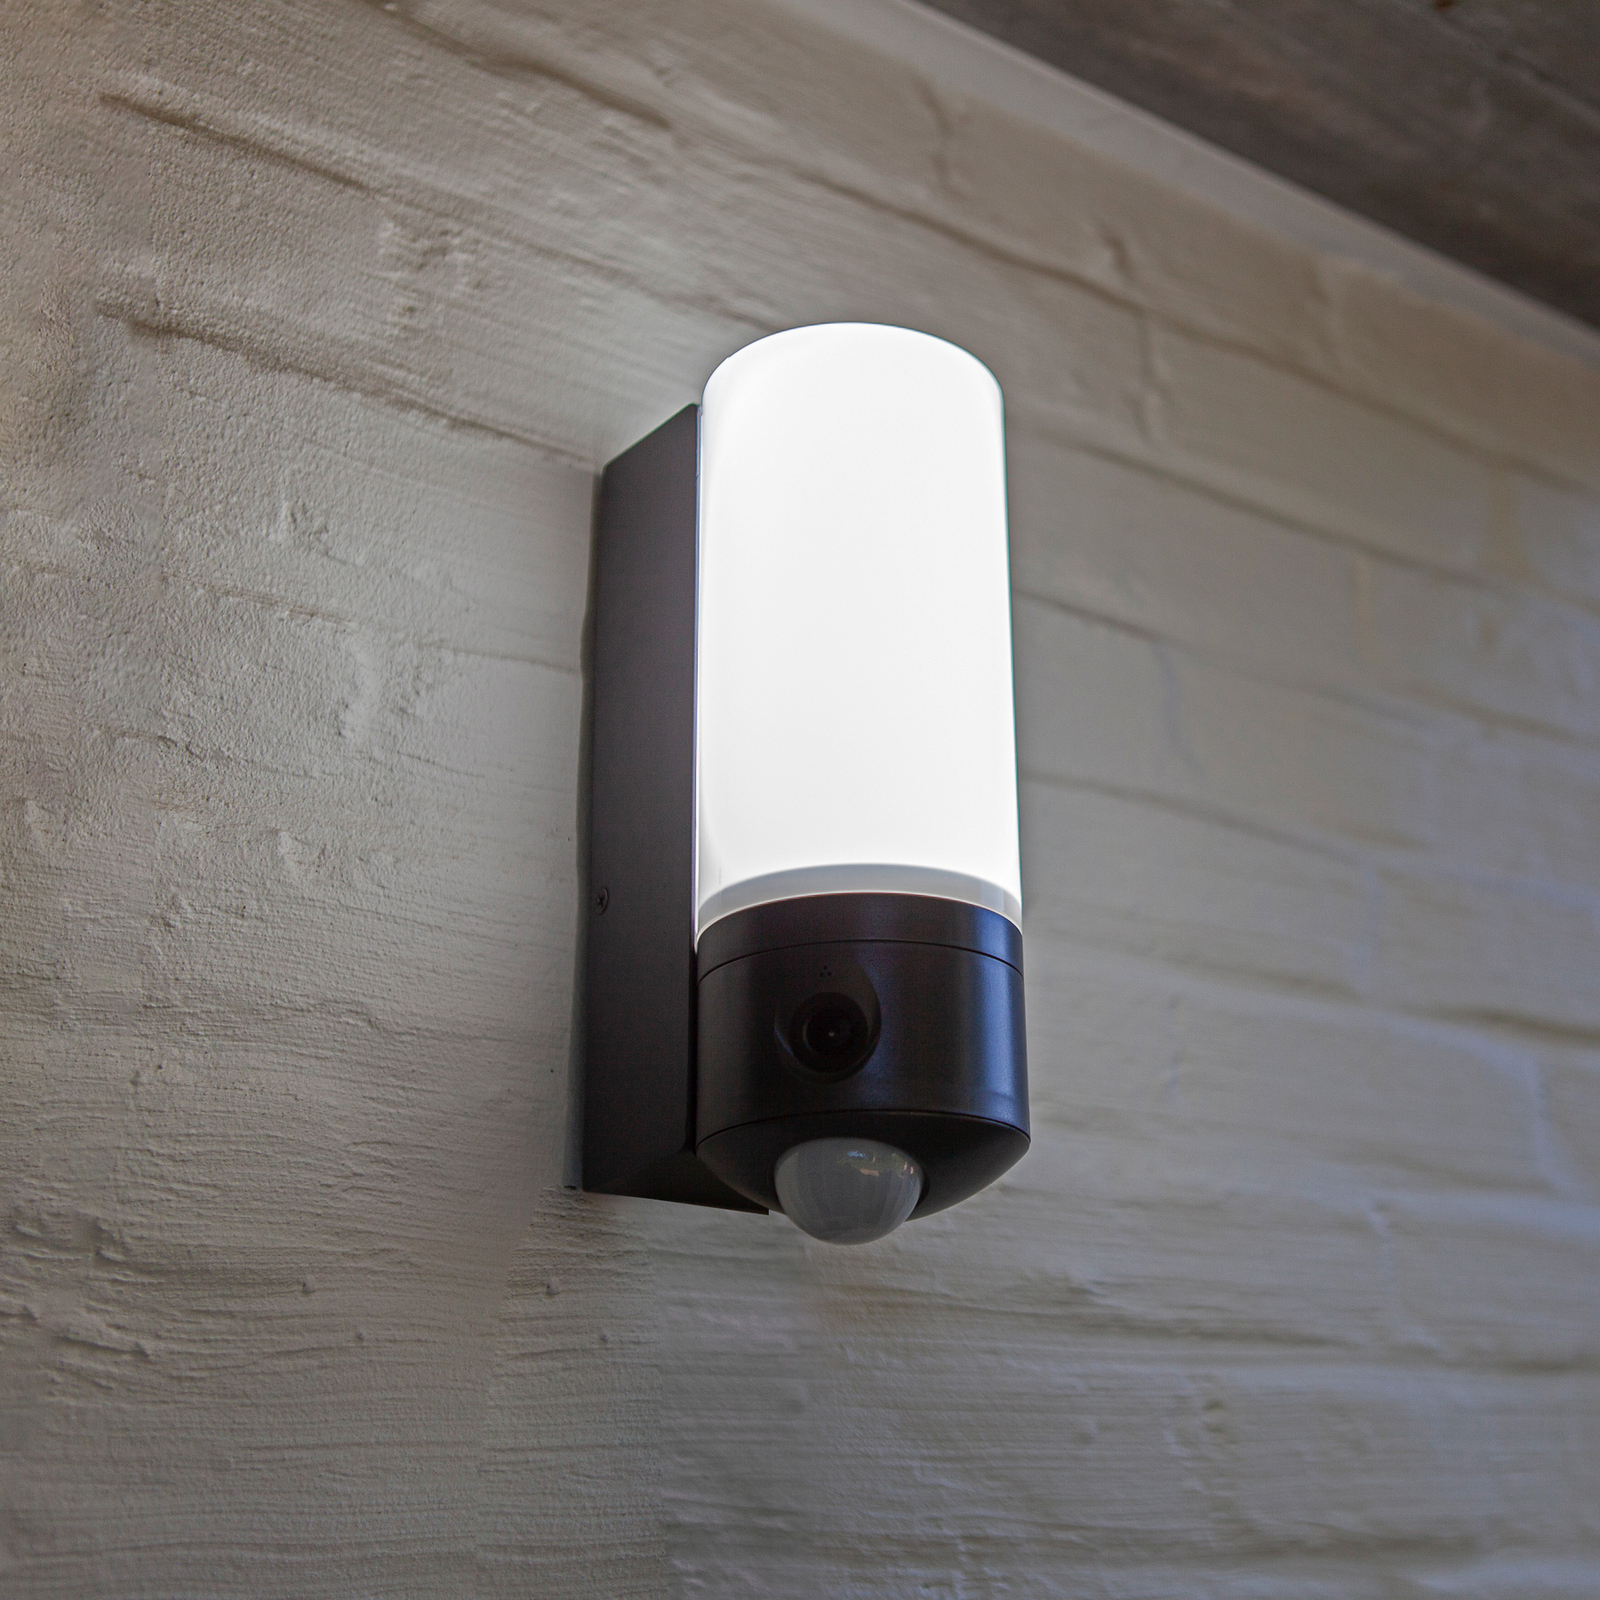 Pollux LED outdoor wall light, camera sensor